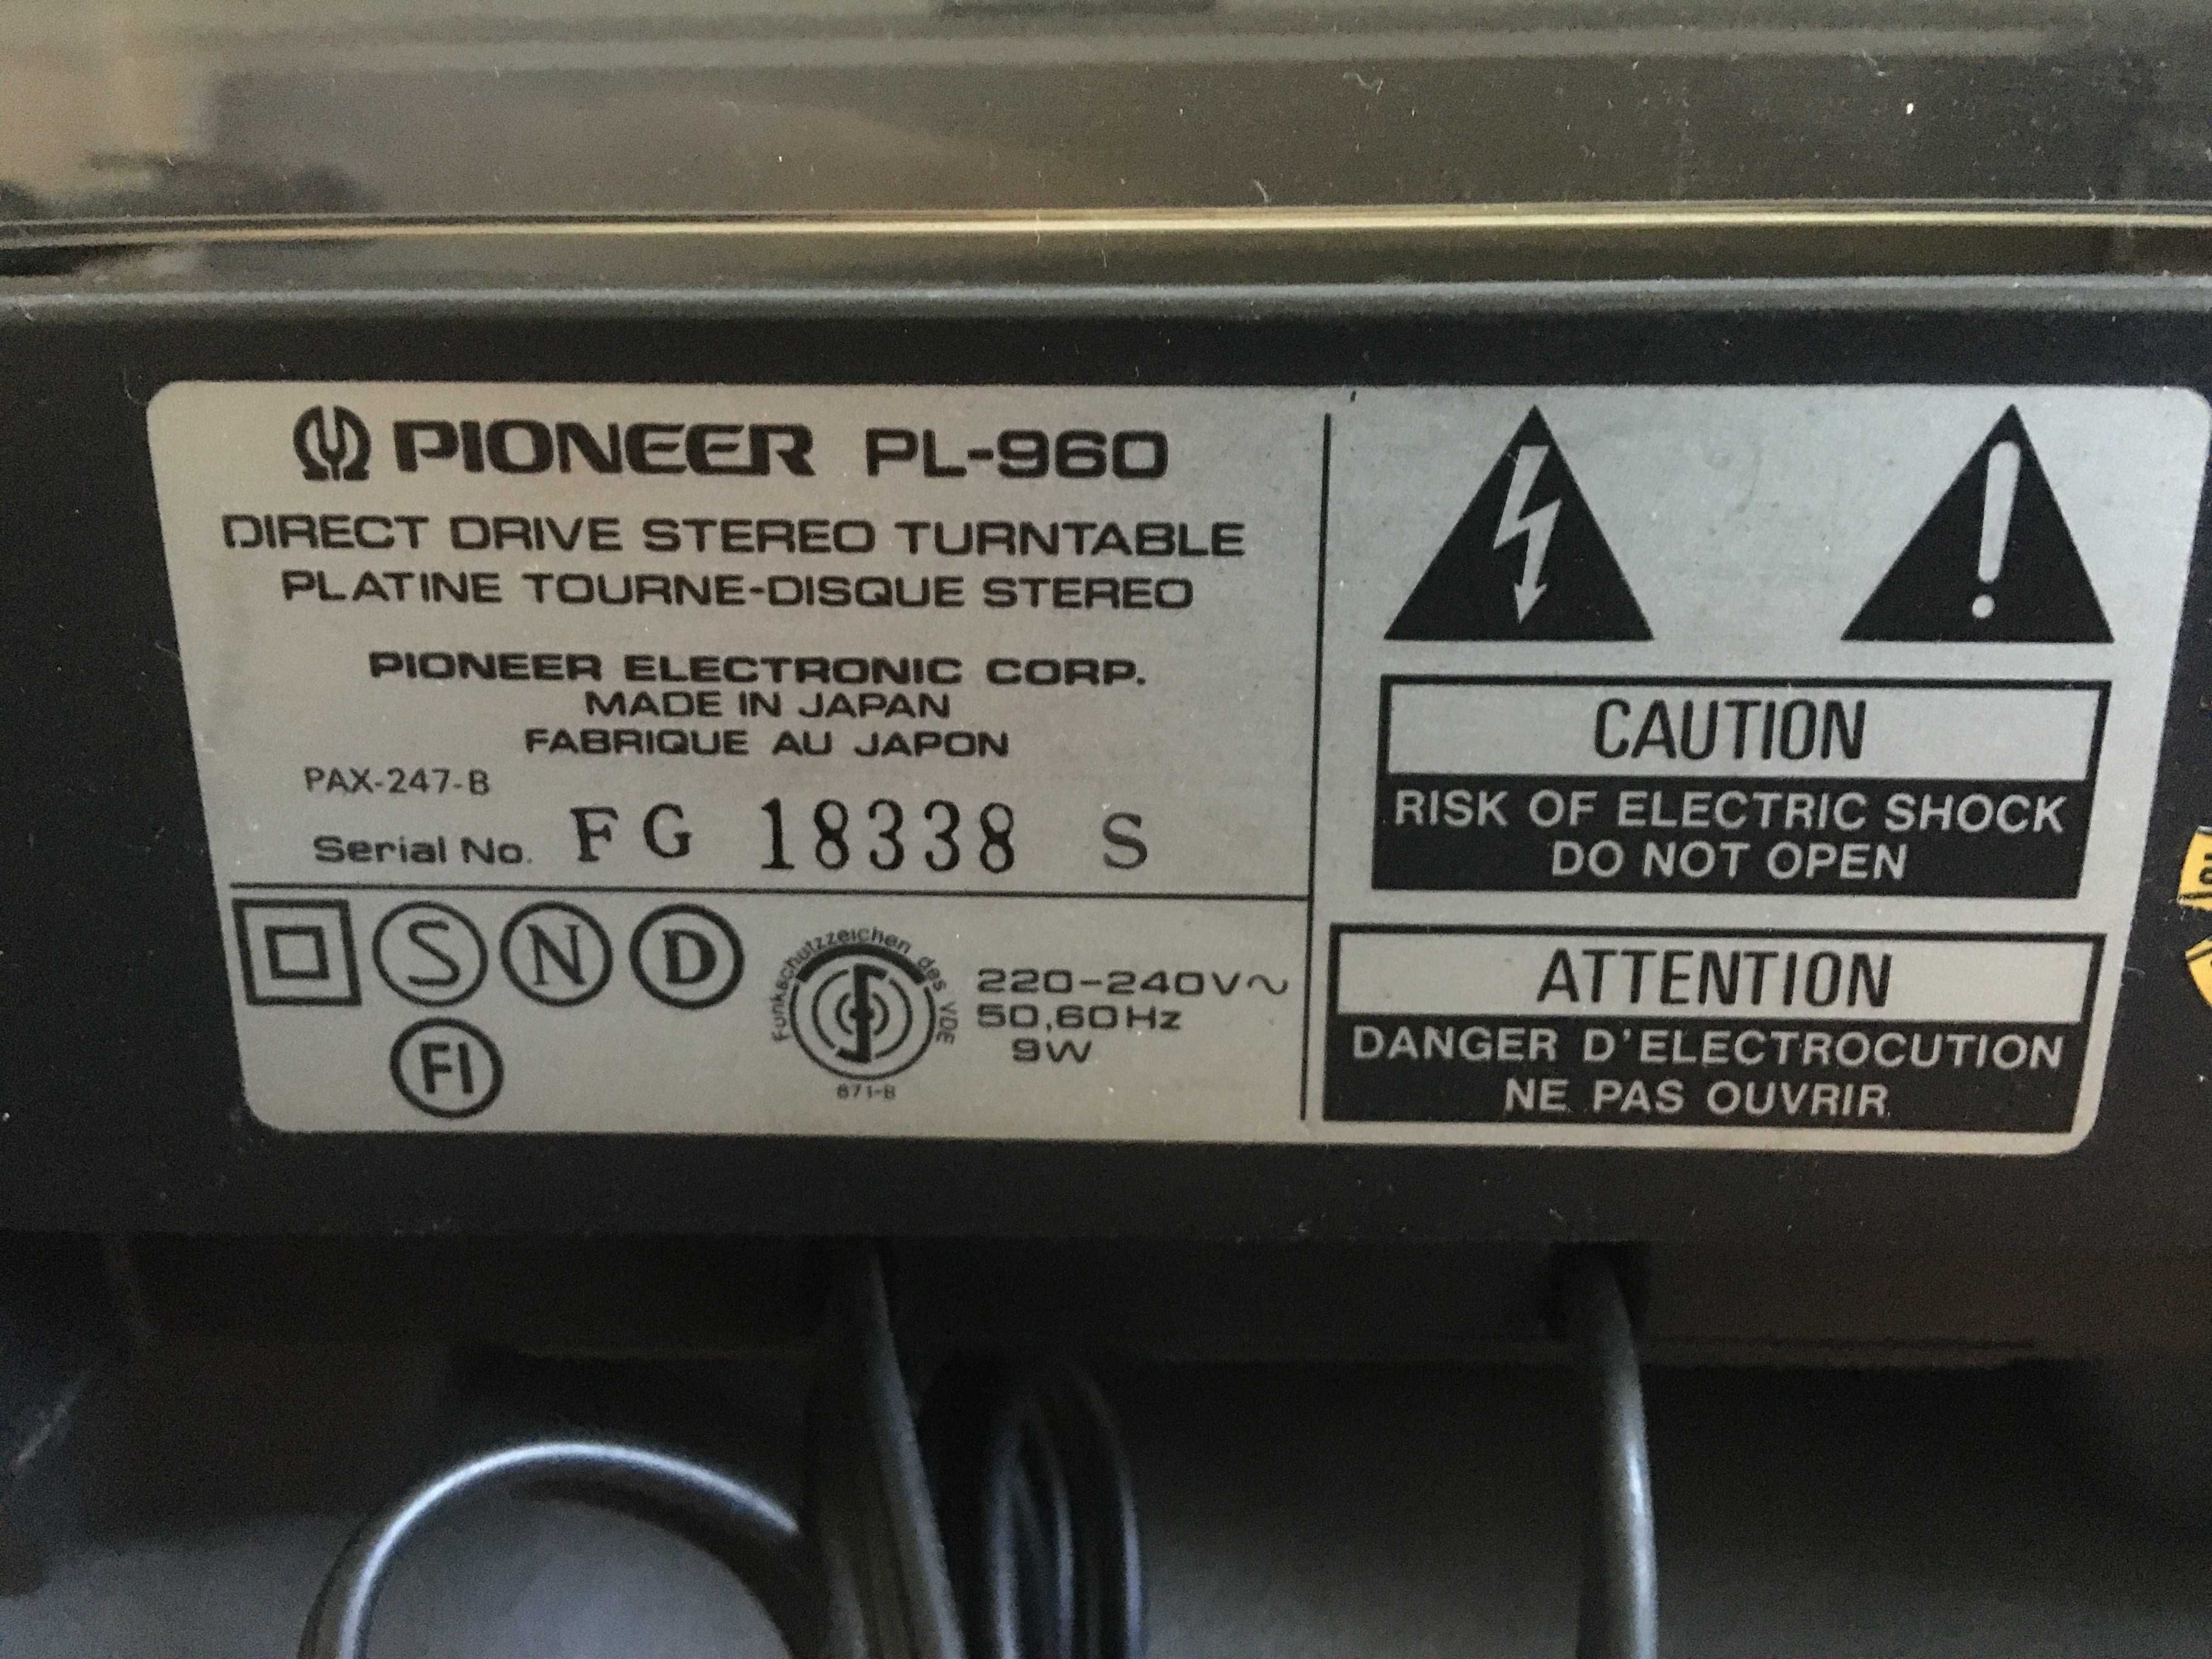 Gramofon Pioneer PL-960 ful-automatic